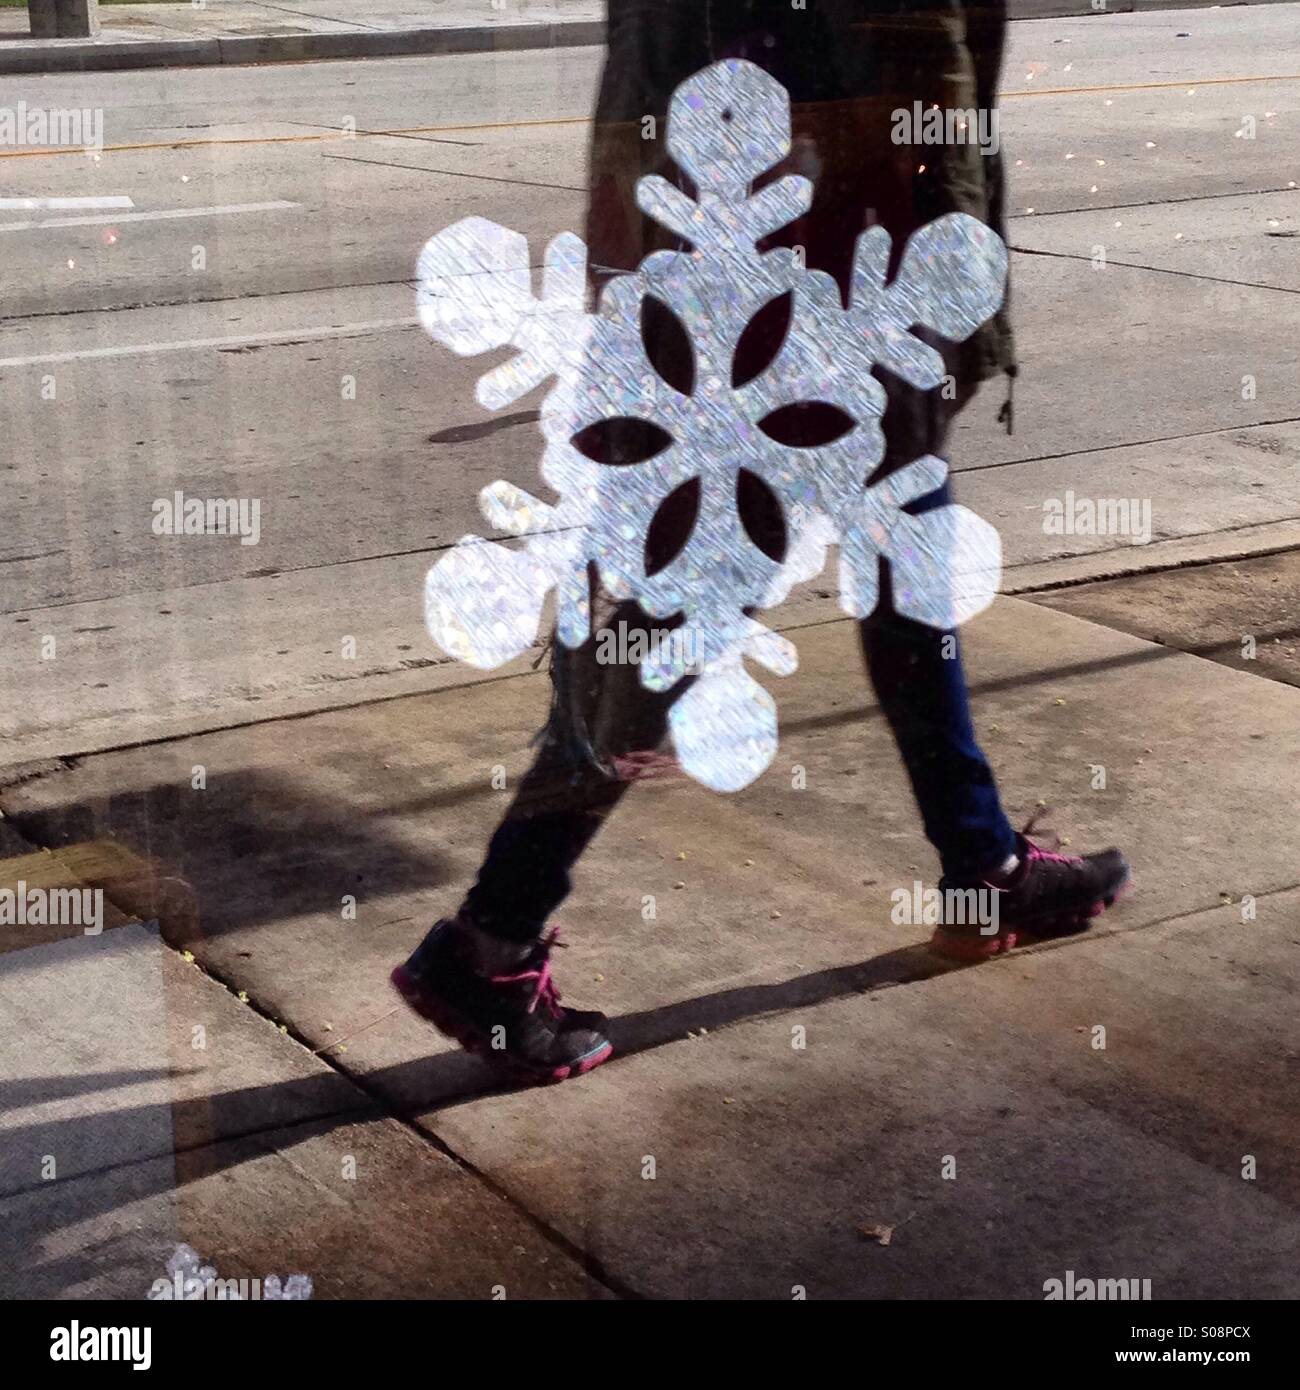 Pedestrian's reflection in a white paper snowflake decorated window, sidewalk scene Stock Photo